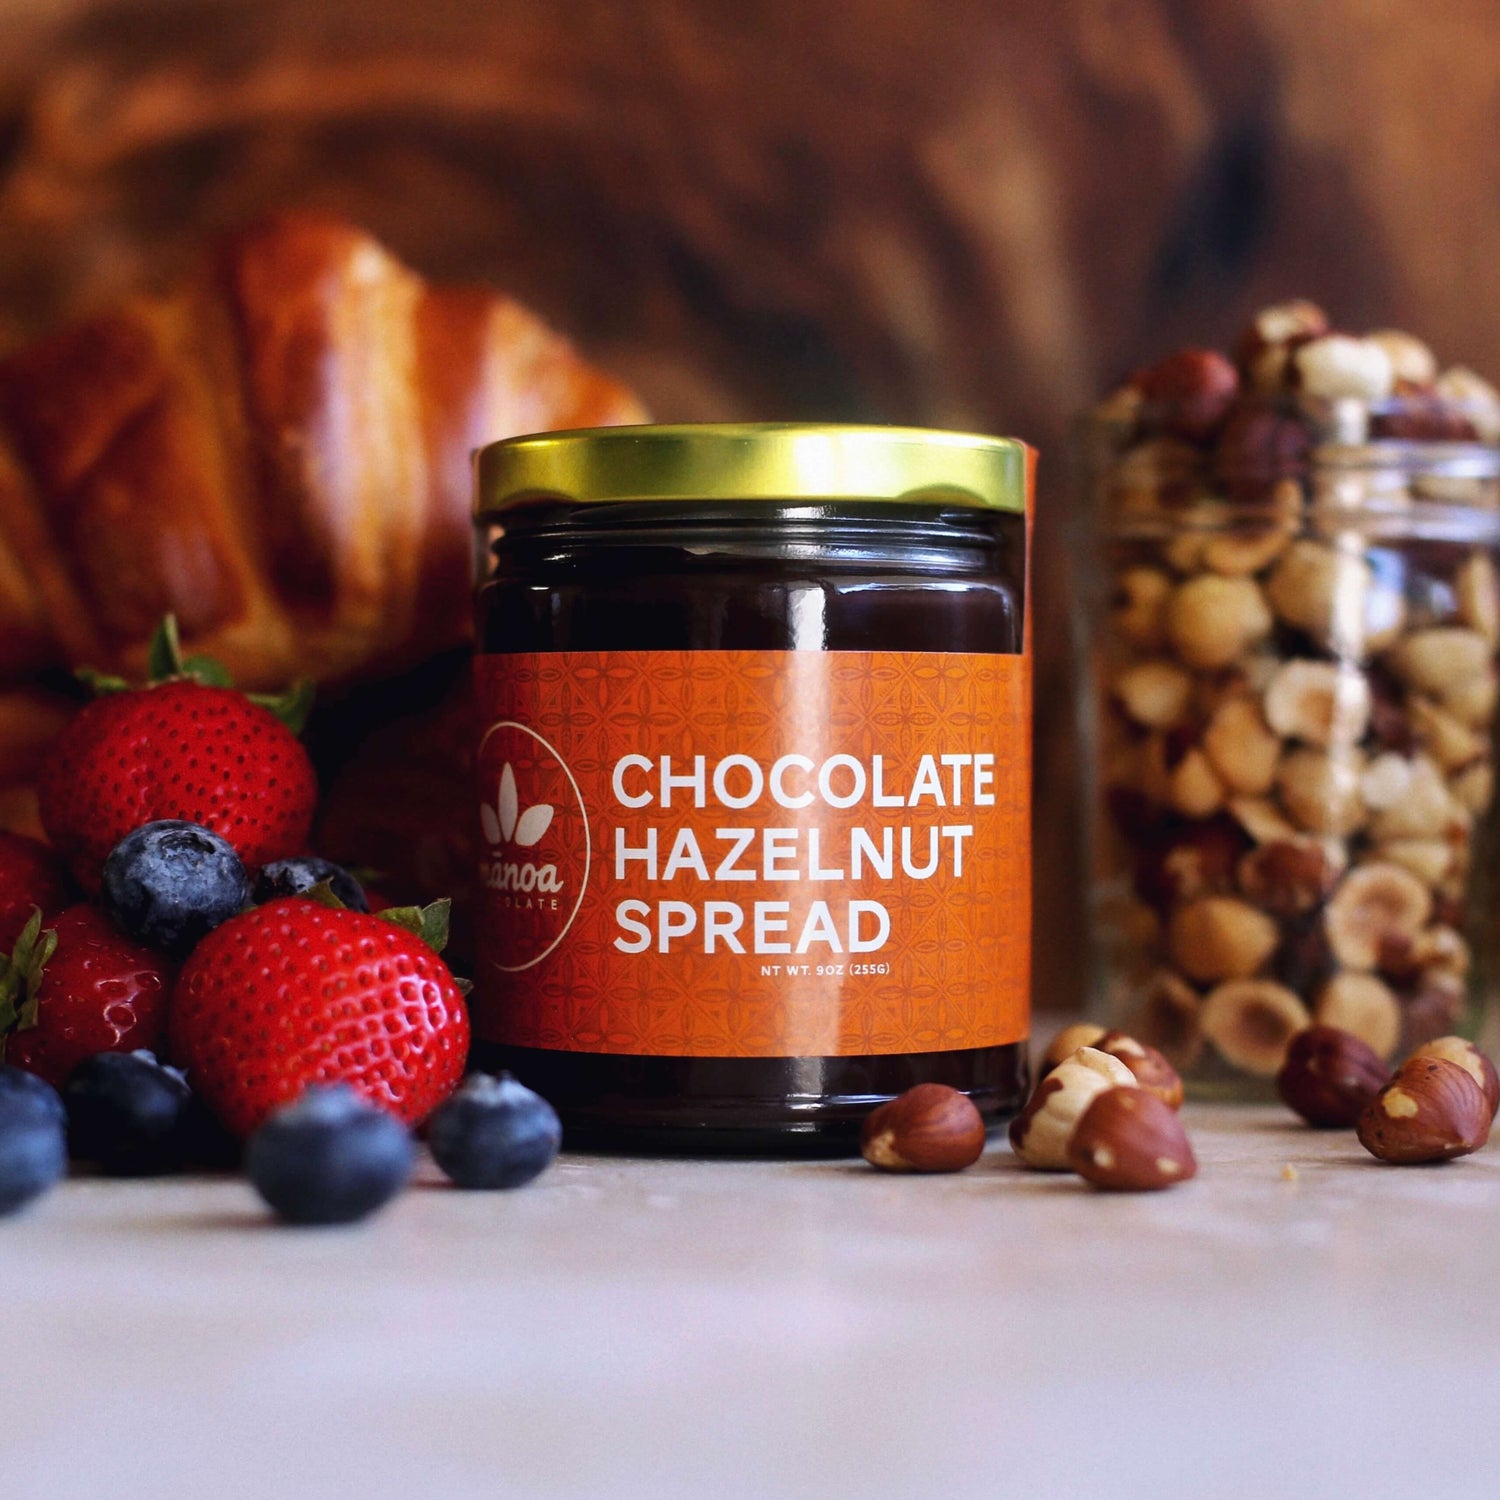 Jar of chocolate hazelnut spread among fruit and nuts